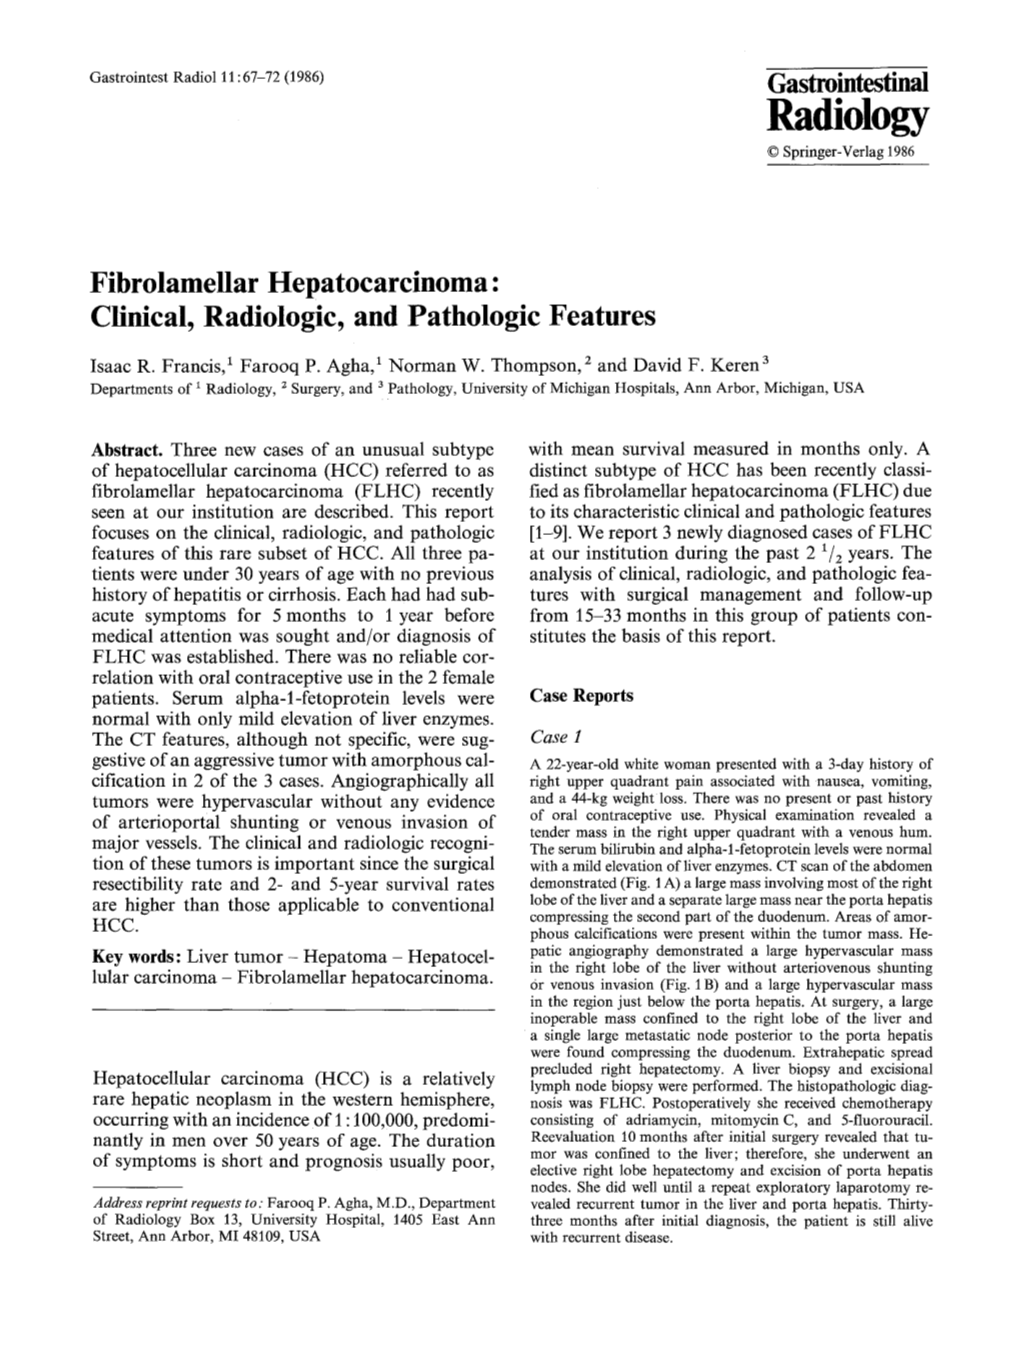 Fibrolamellar Hepatocarcinoma: Clinical, Radiologic, and Pathologic Features